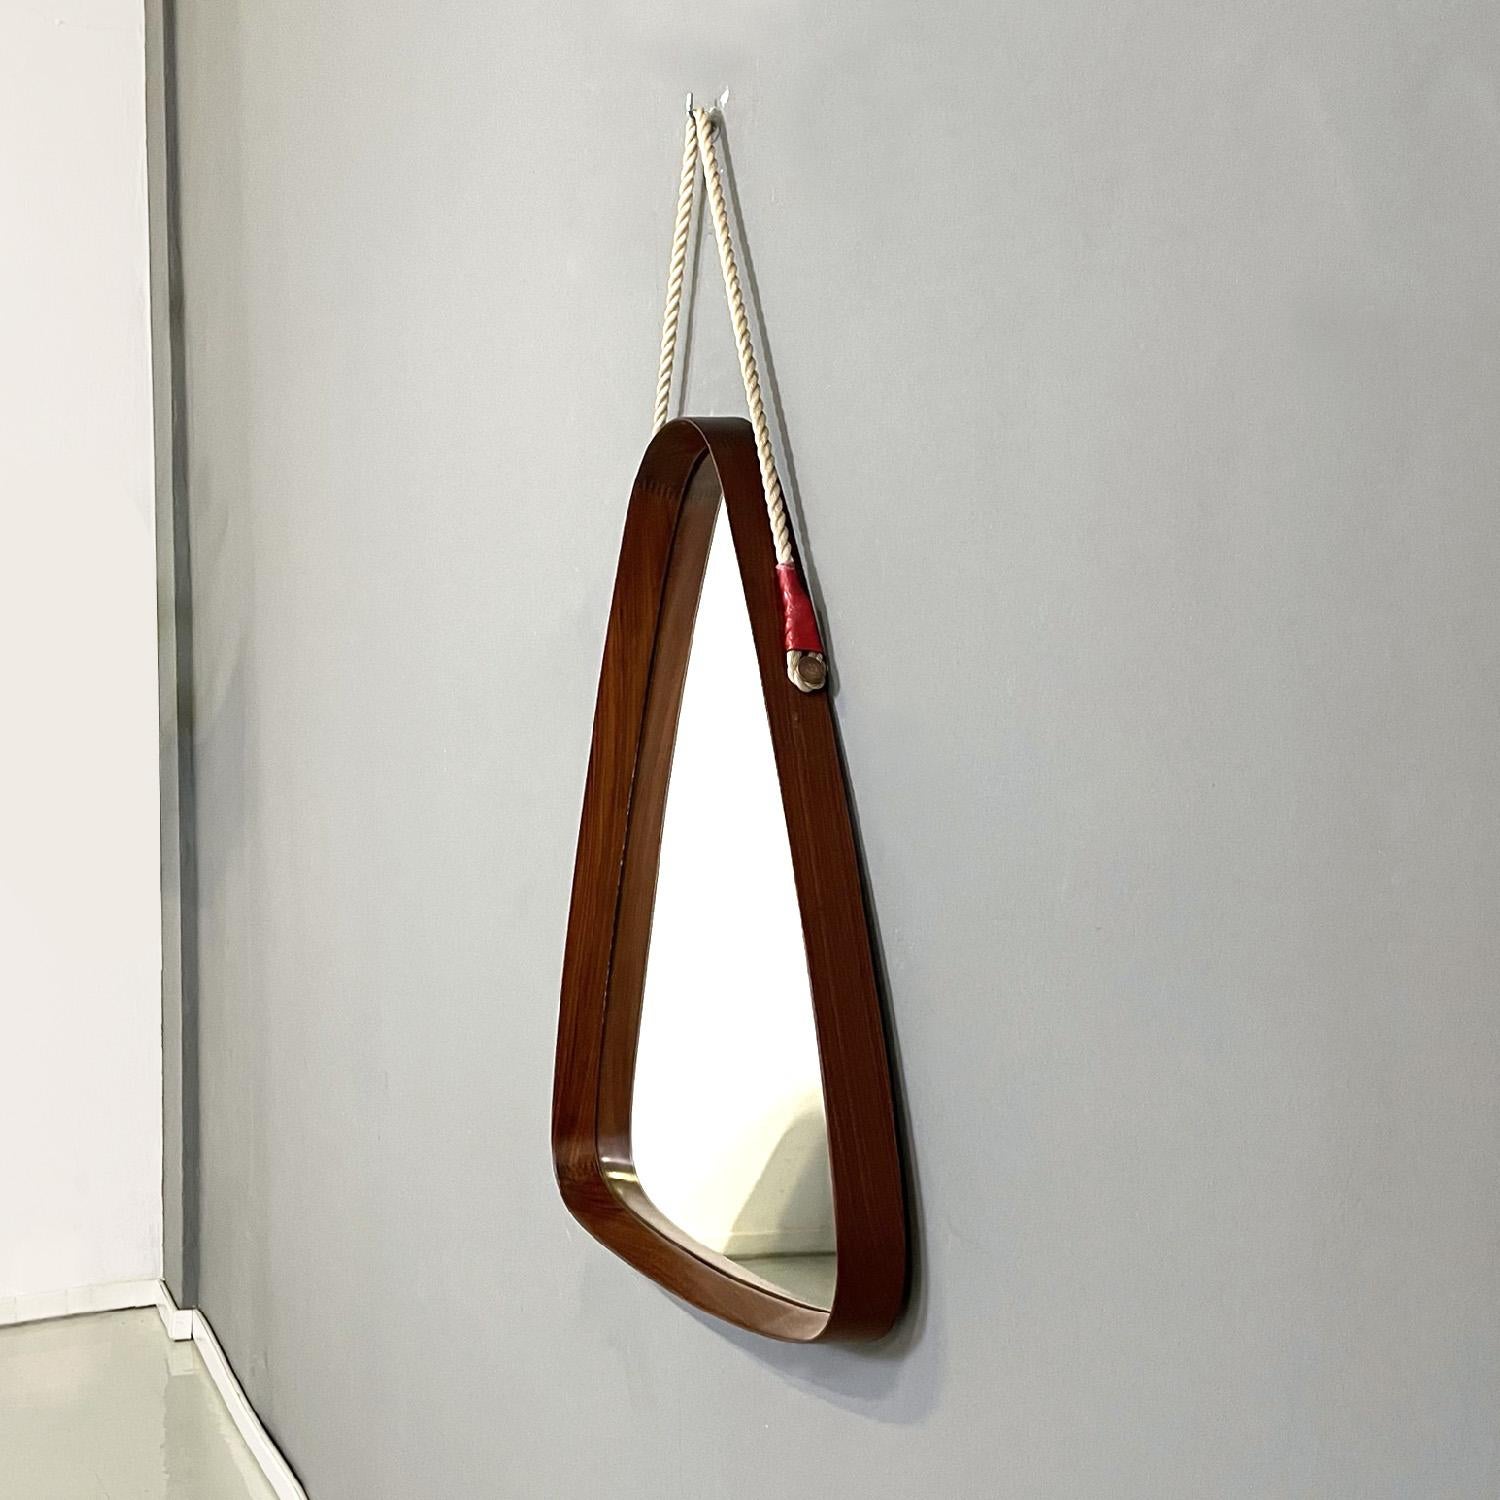 Mid-Century Modern Italian mid-century modern solid wood triangular wall mirror with cord, 1960s